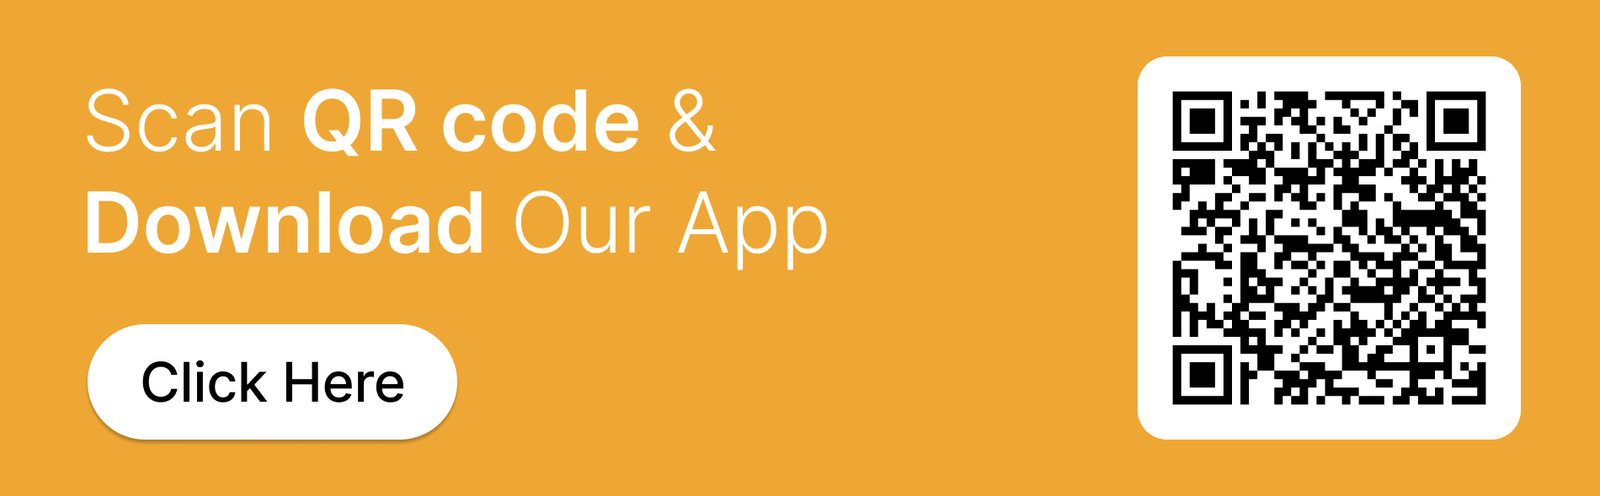 SnackSync Food Service App | iOS/Android - Flutter UI Kit - 1